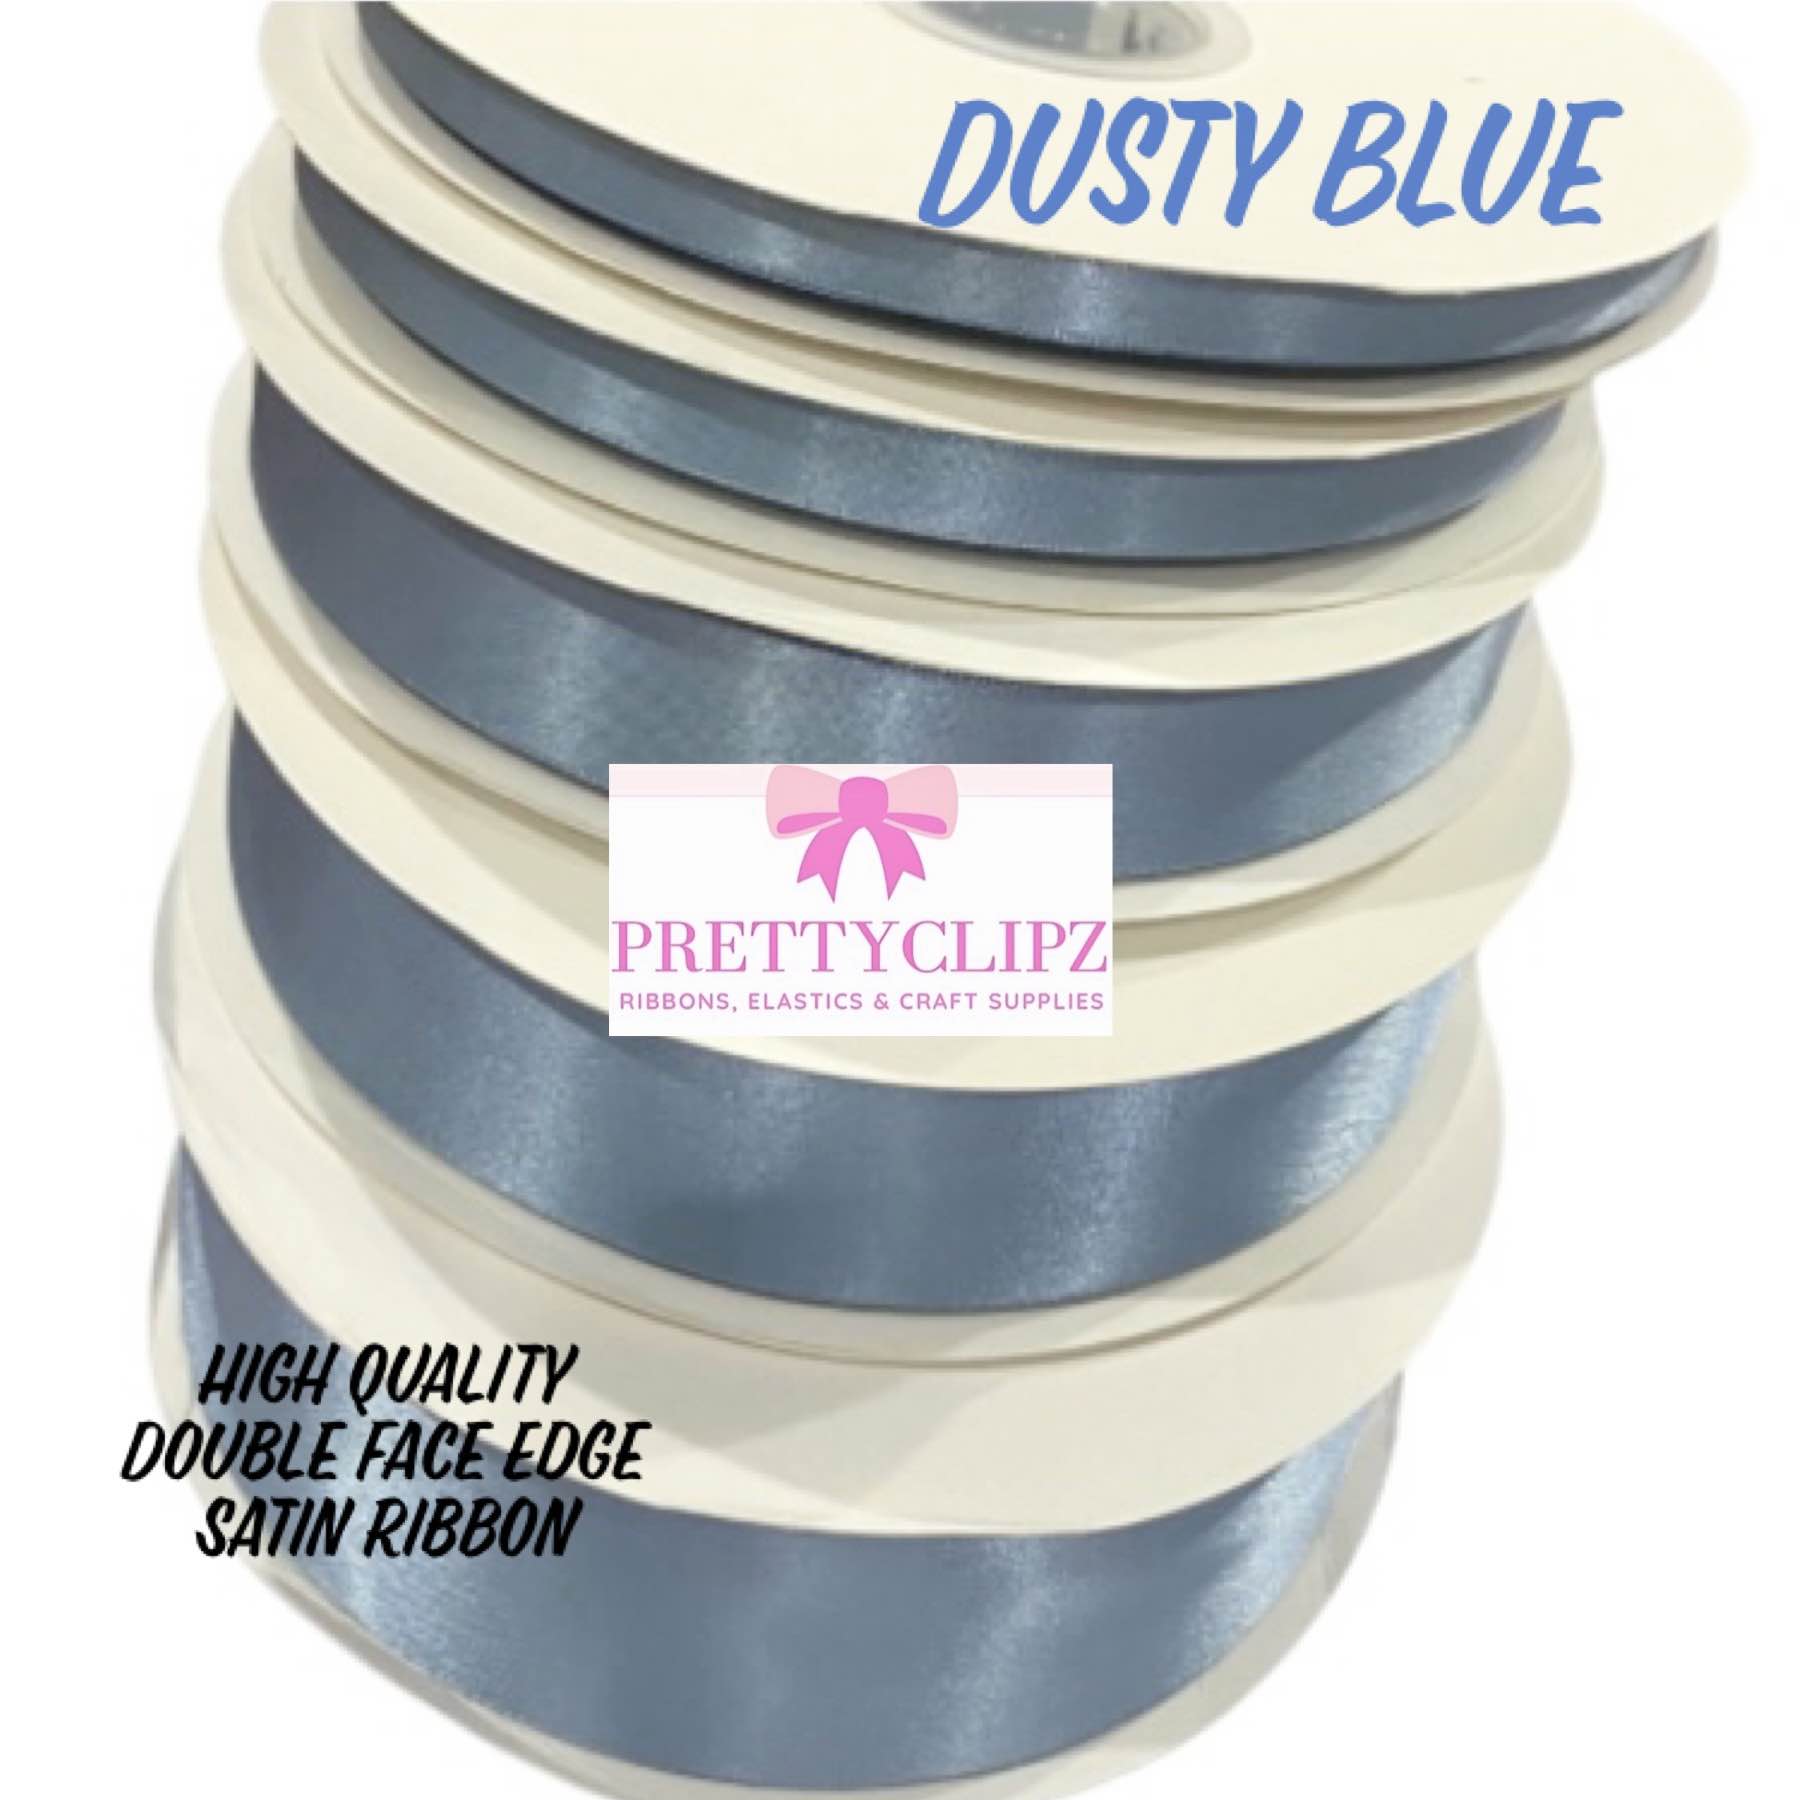 Dusty Blue Double Face Edge Satin Ribbon High Quality 25Y & 50Y